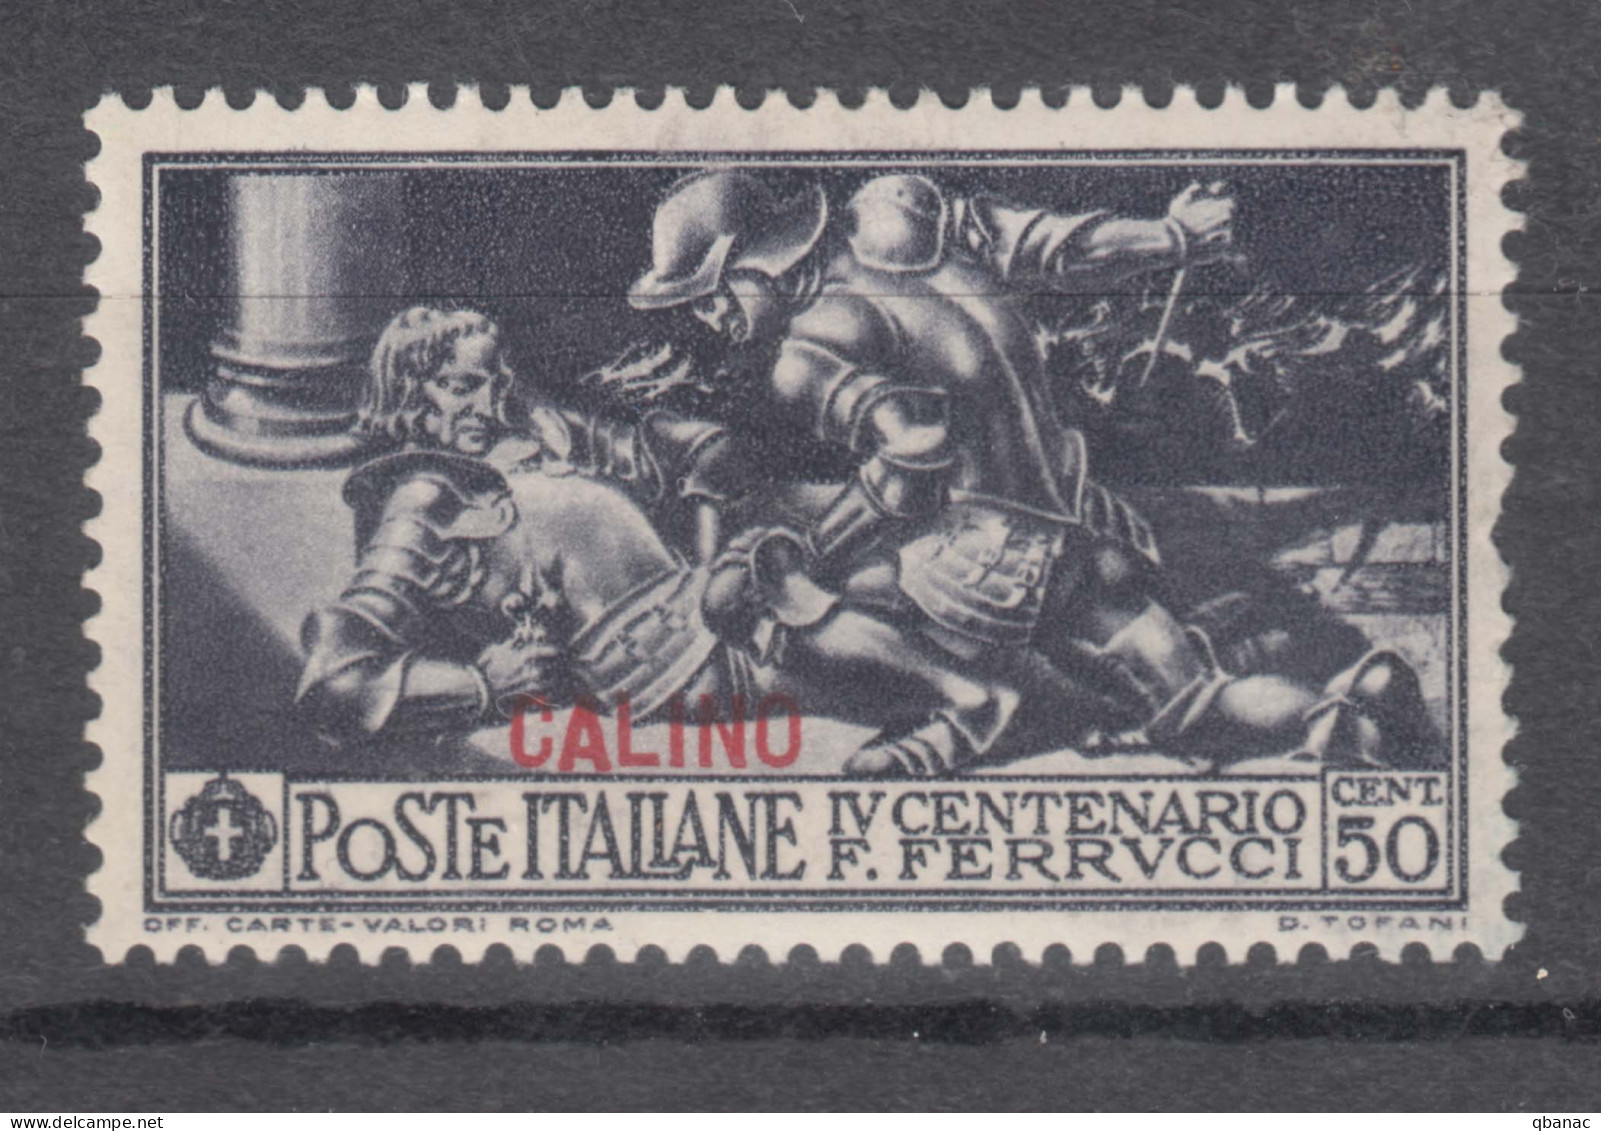 Italy Colonies Aegean Islands Egeo Calimno (Calino) 1930 Sassone#14 Mint Hinged - Aegean (Calino)